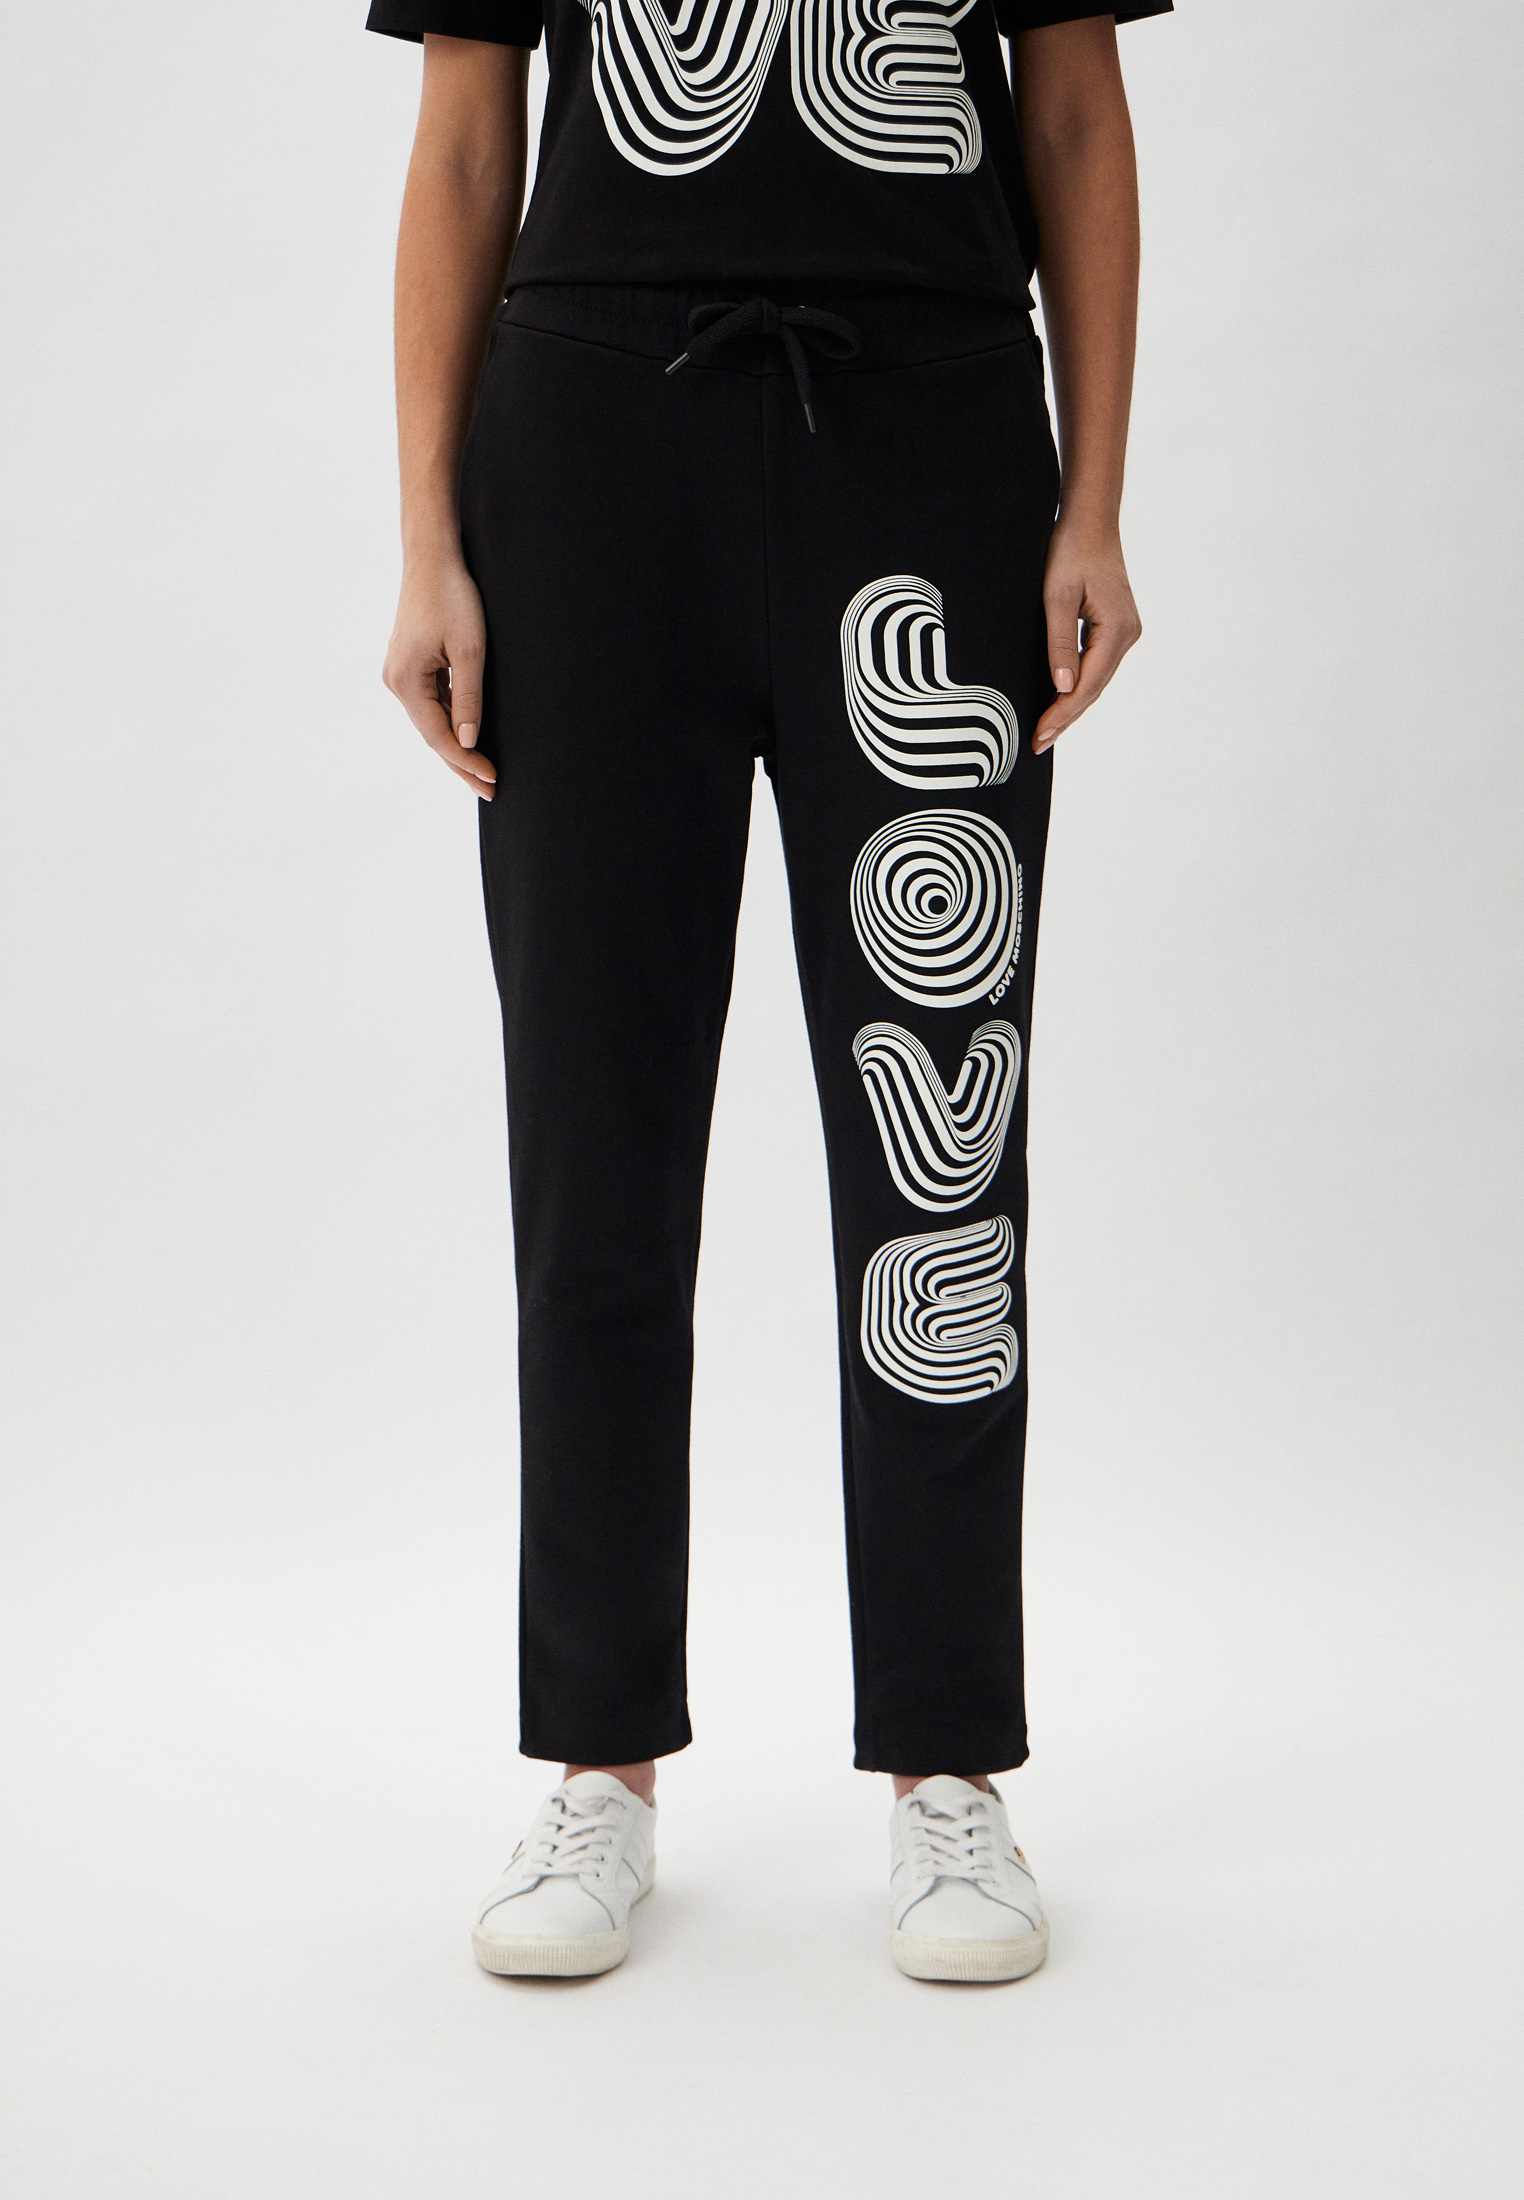 Женские спортивные брюки Love Moschino (Лав Москино) W 1 556 09 M 4457